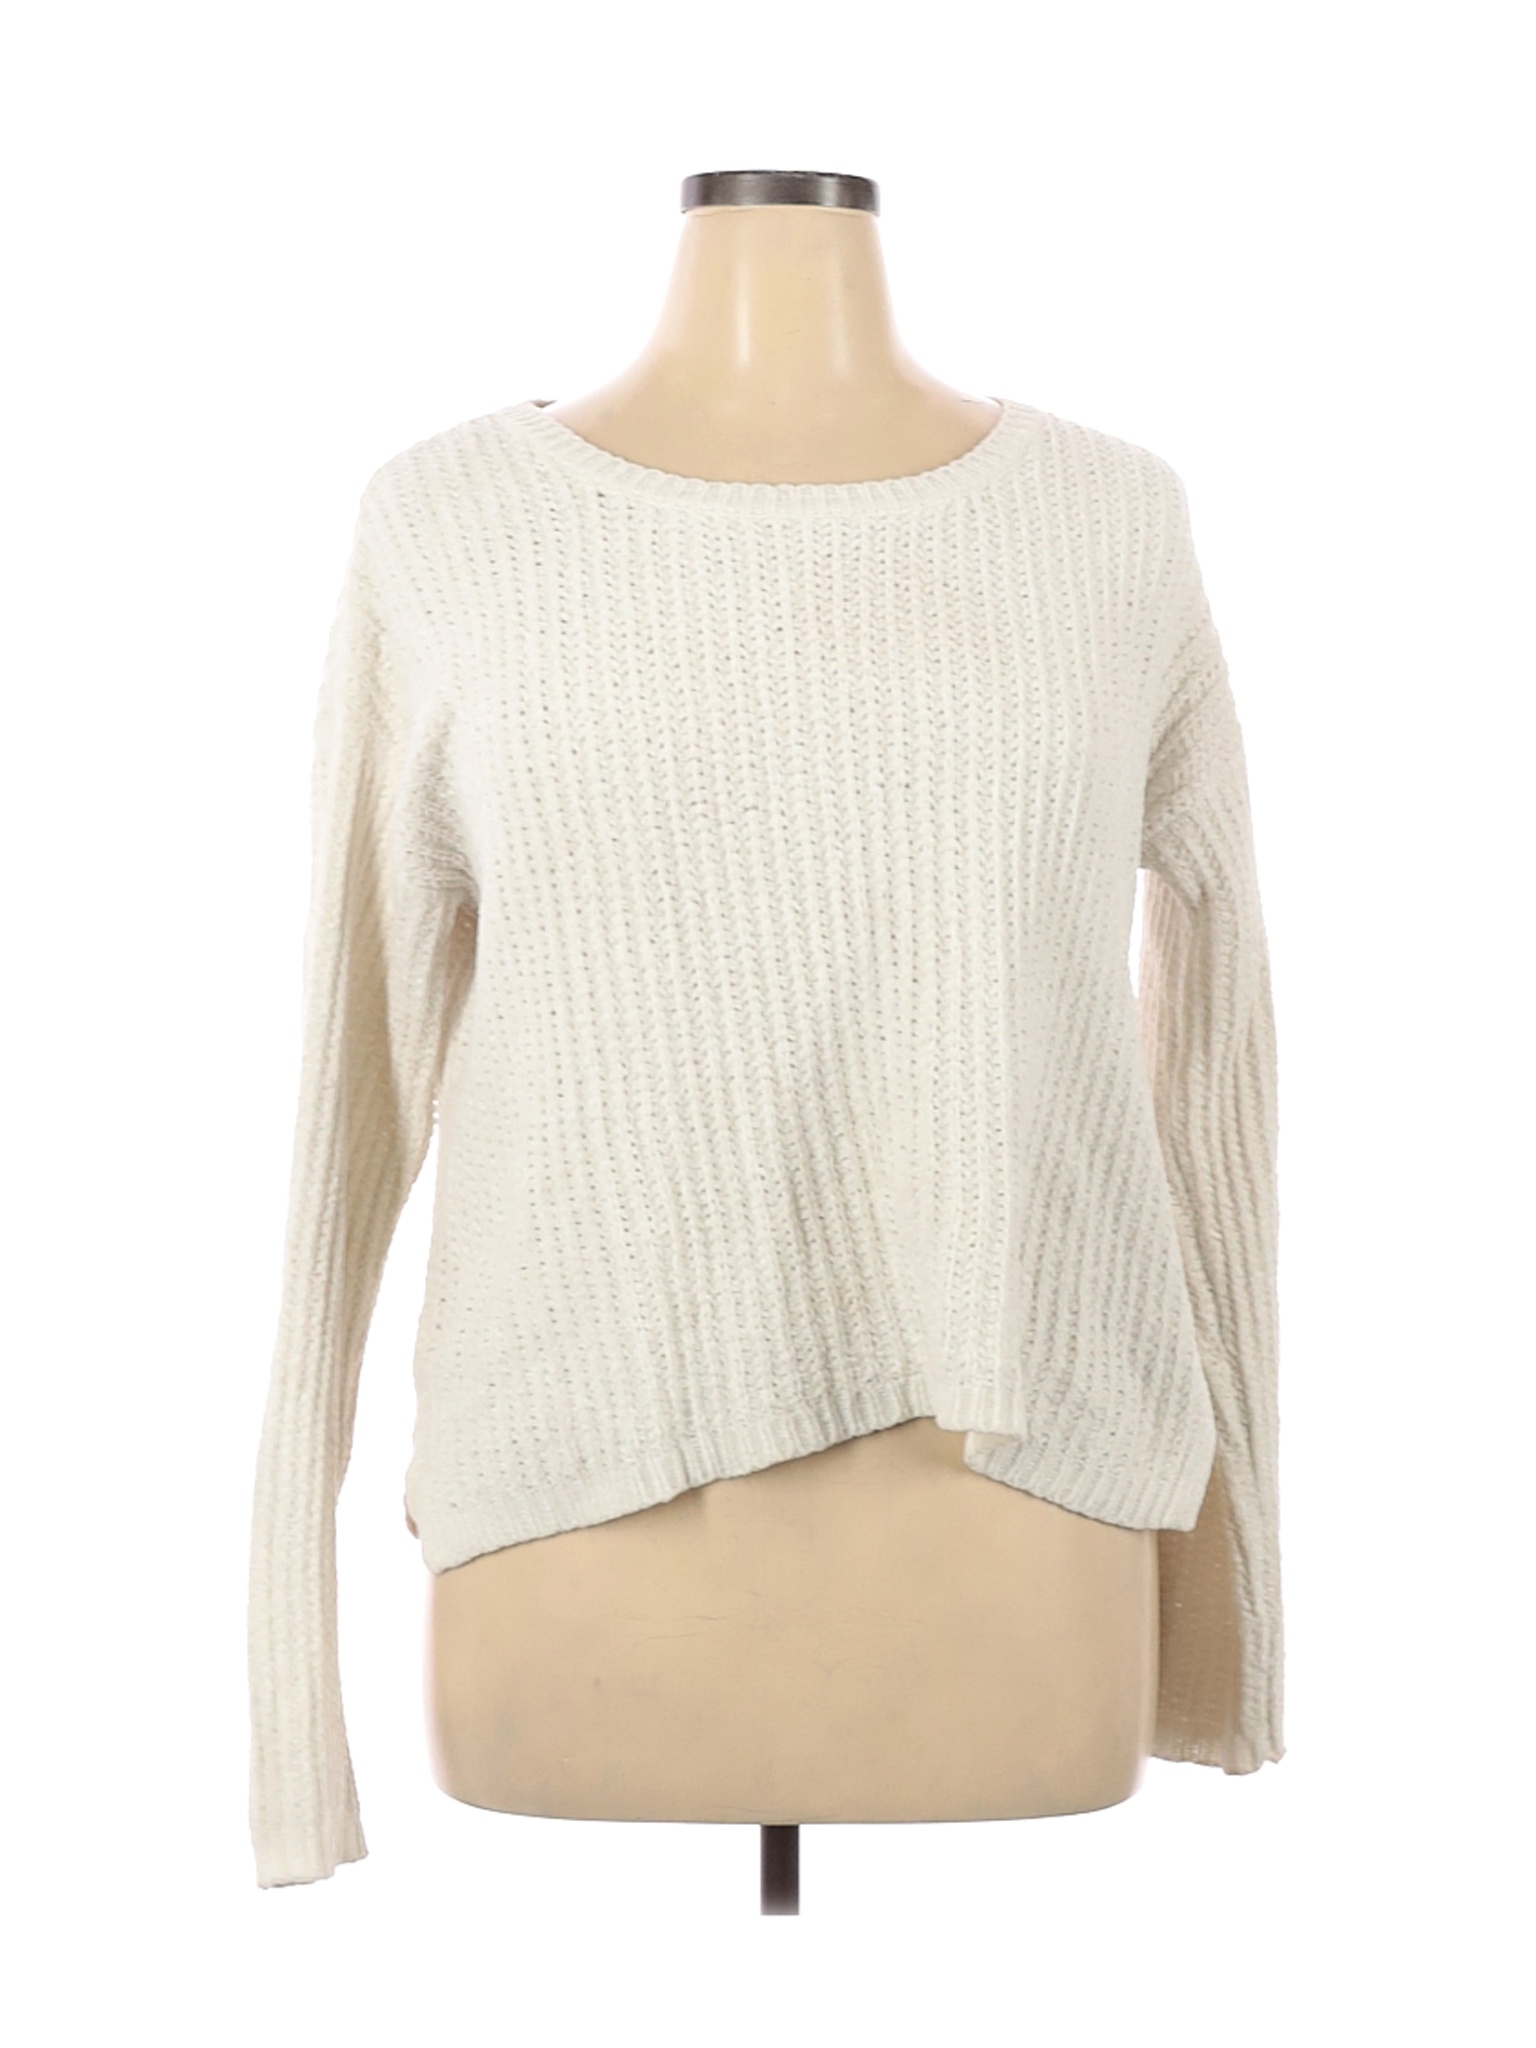 Aeropostale Women White Pullover Sweater XL | eBay